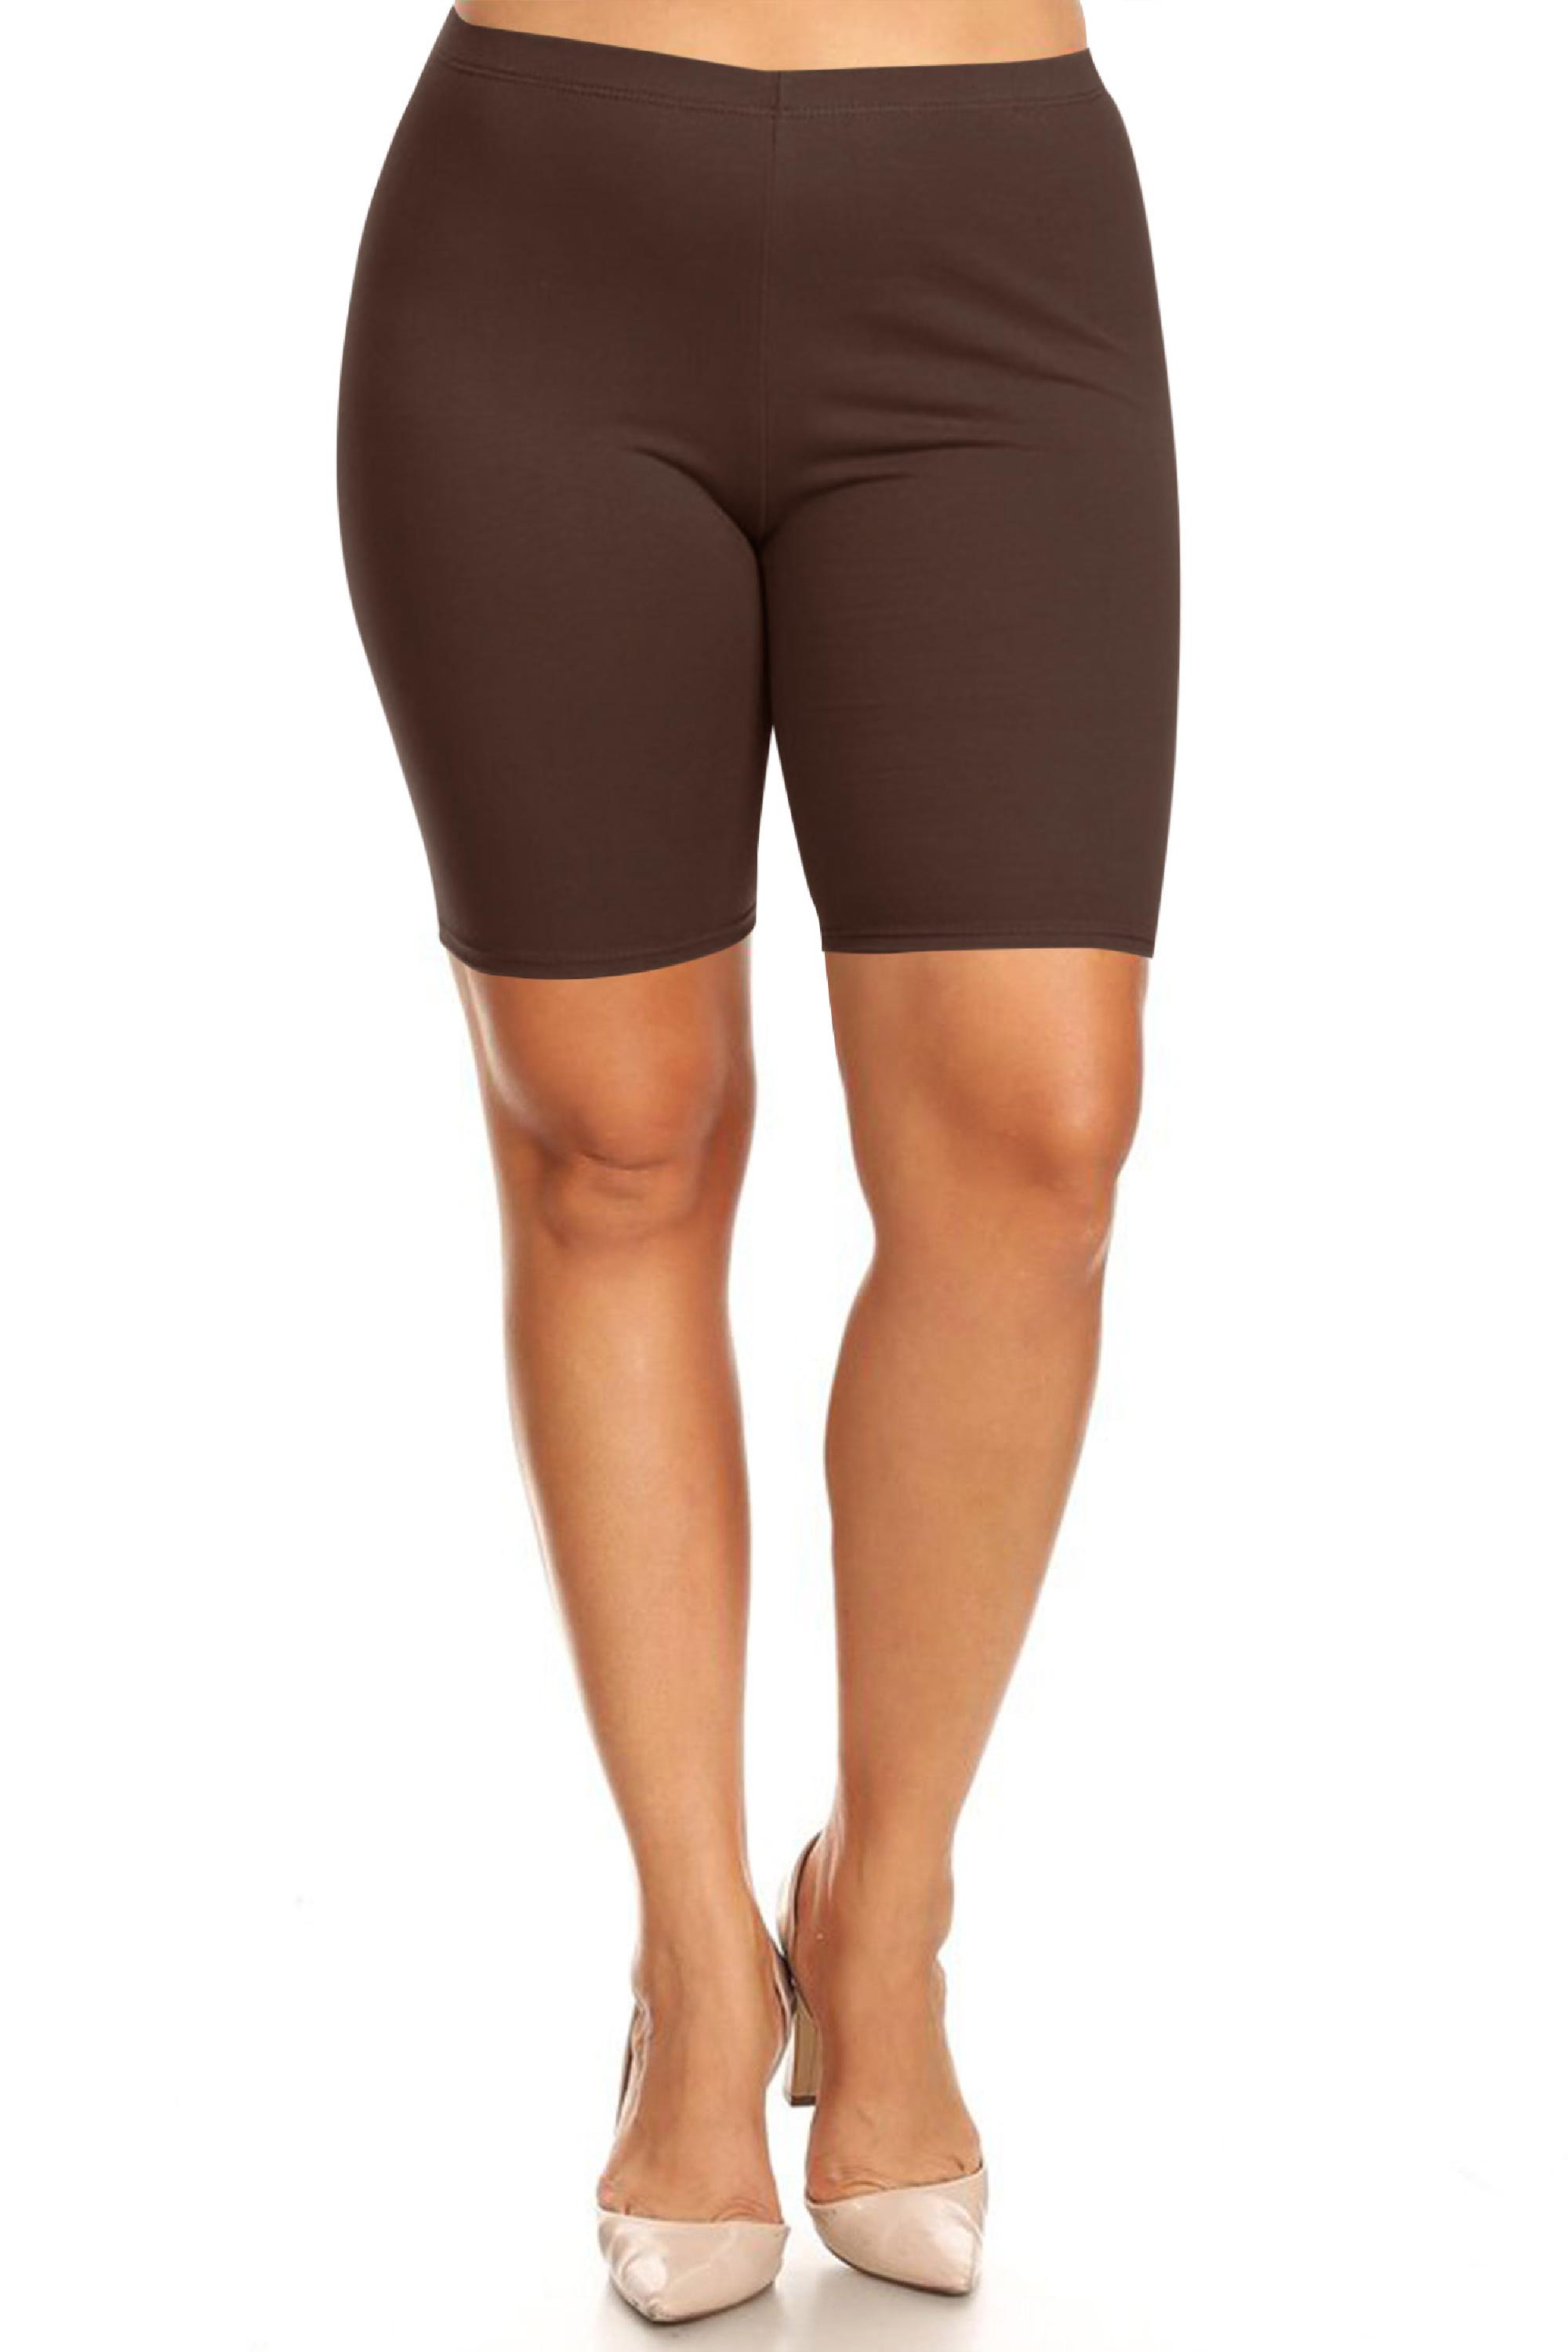 Cimkiz Biker Shorts for Women Black High Waisted Leggings Compression Exercise Plus Size with Pockets 